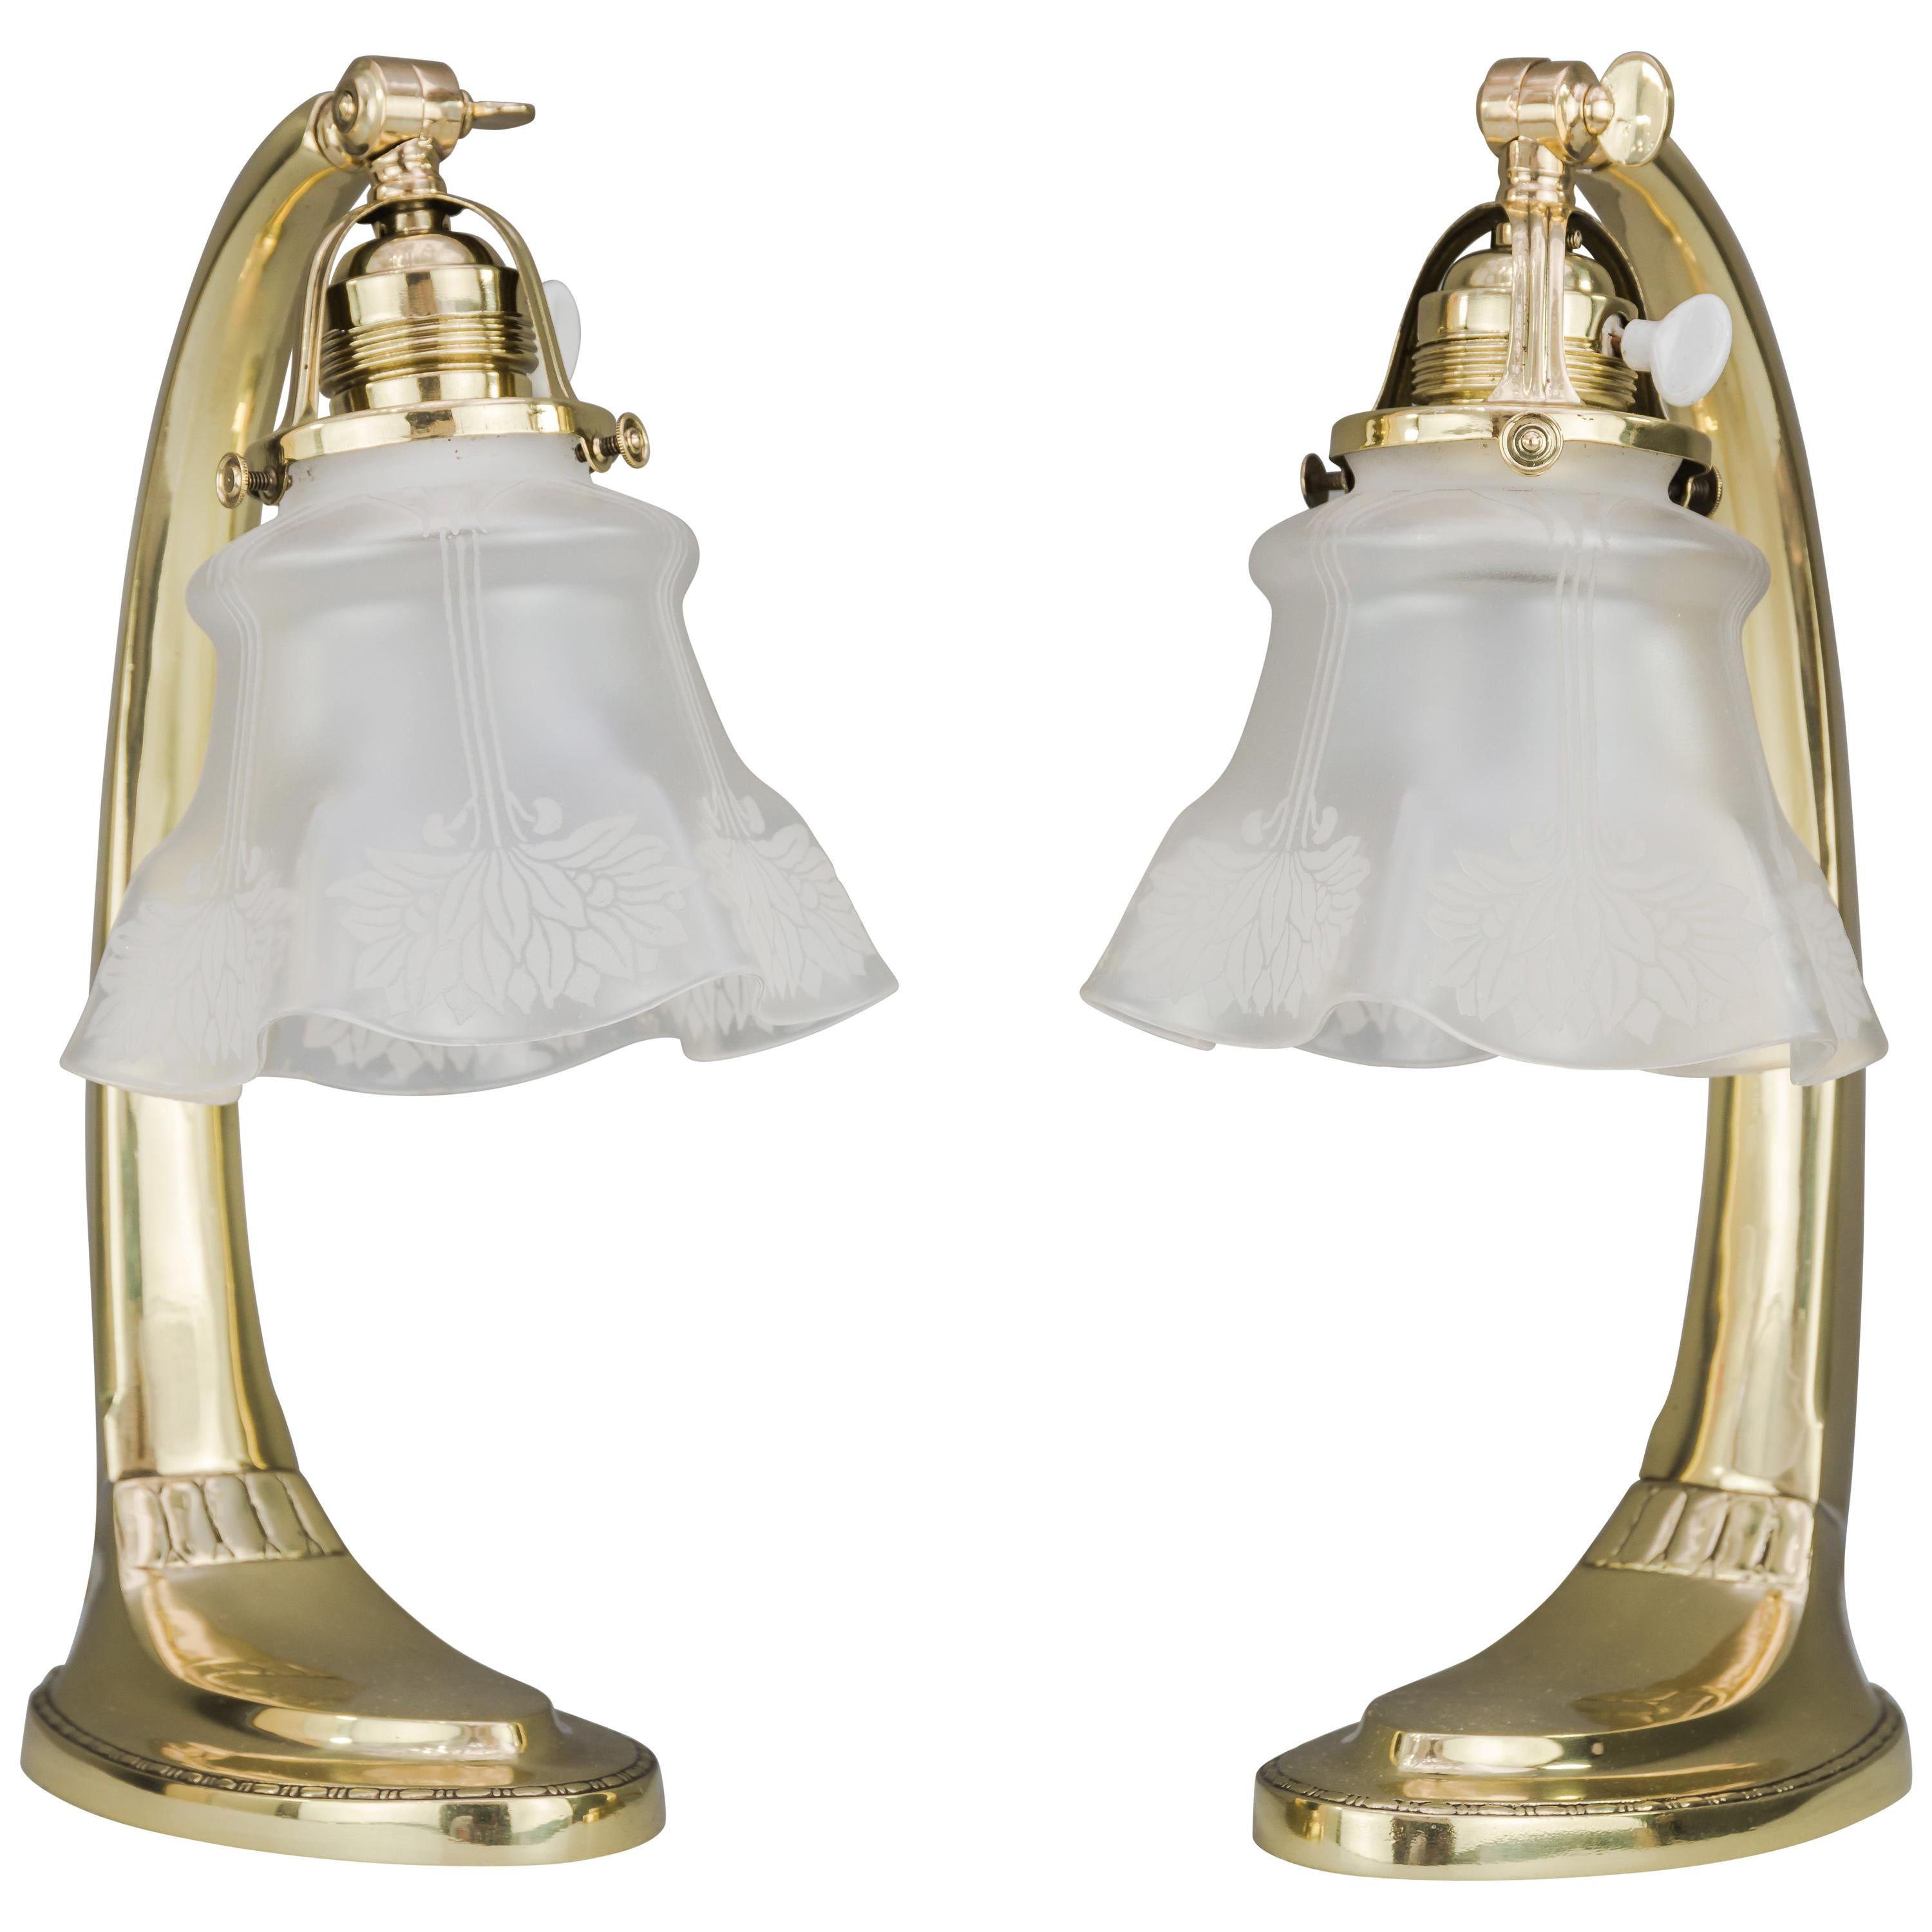 Two Jugendstil Table Lamps 1907 with Original Glas Shades